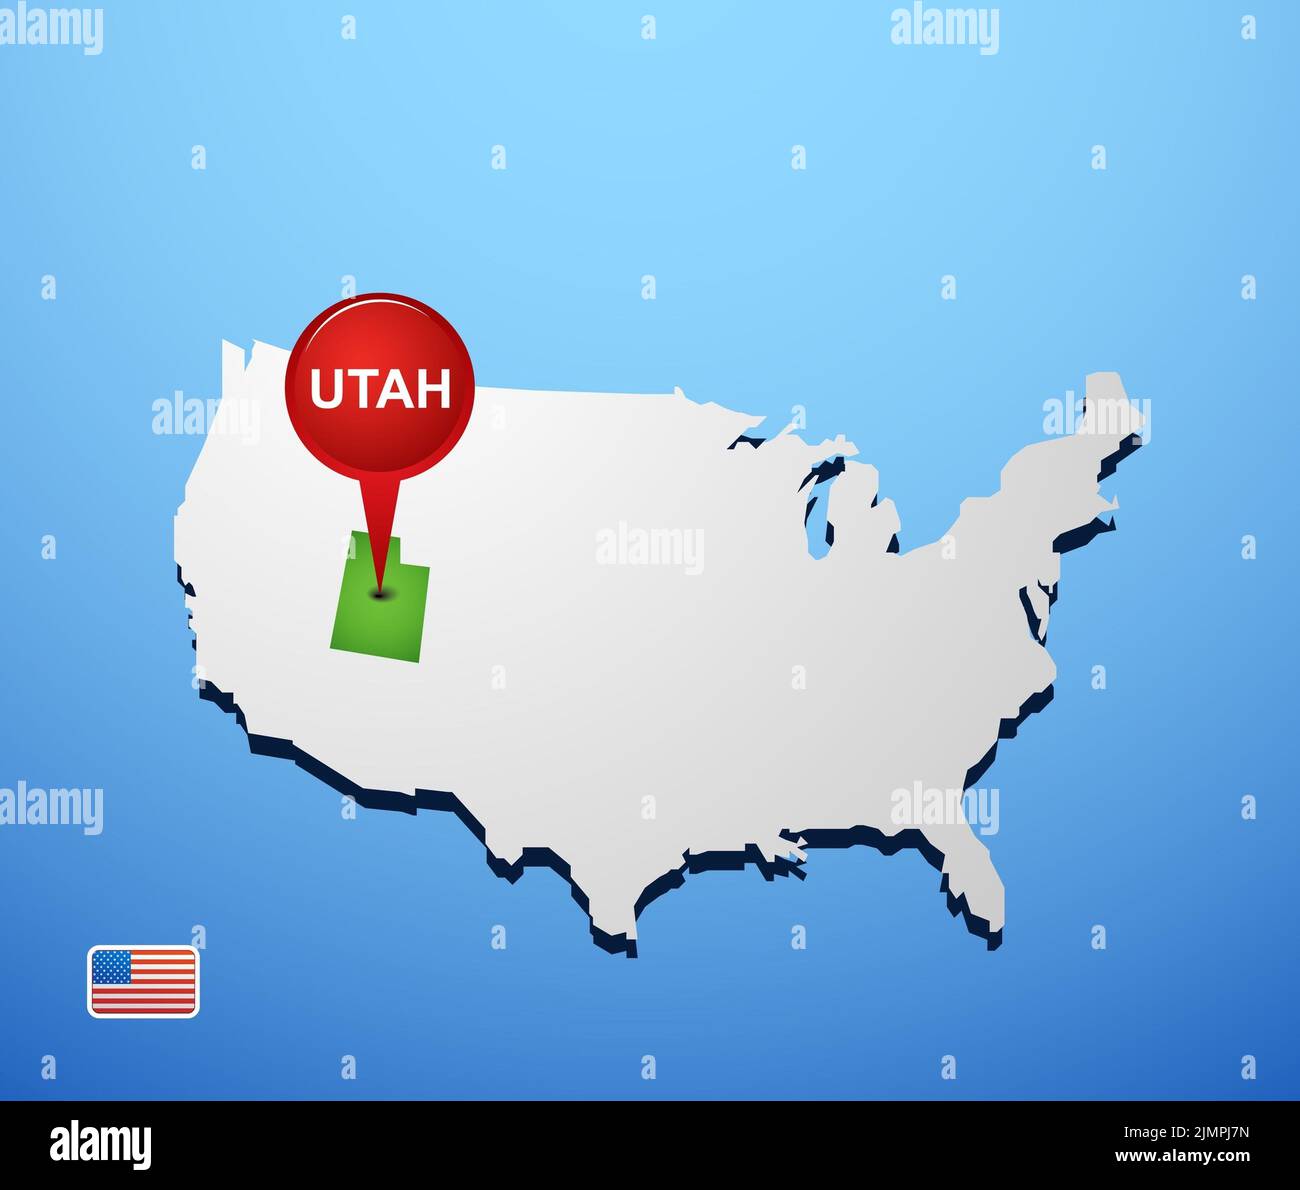 Utah on USA map Stock Photo